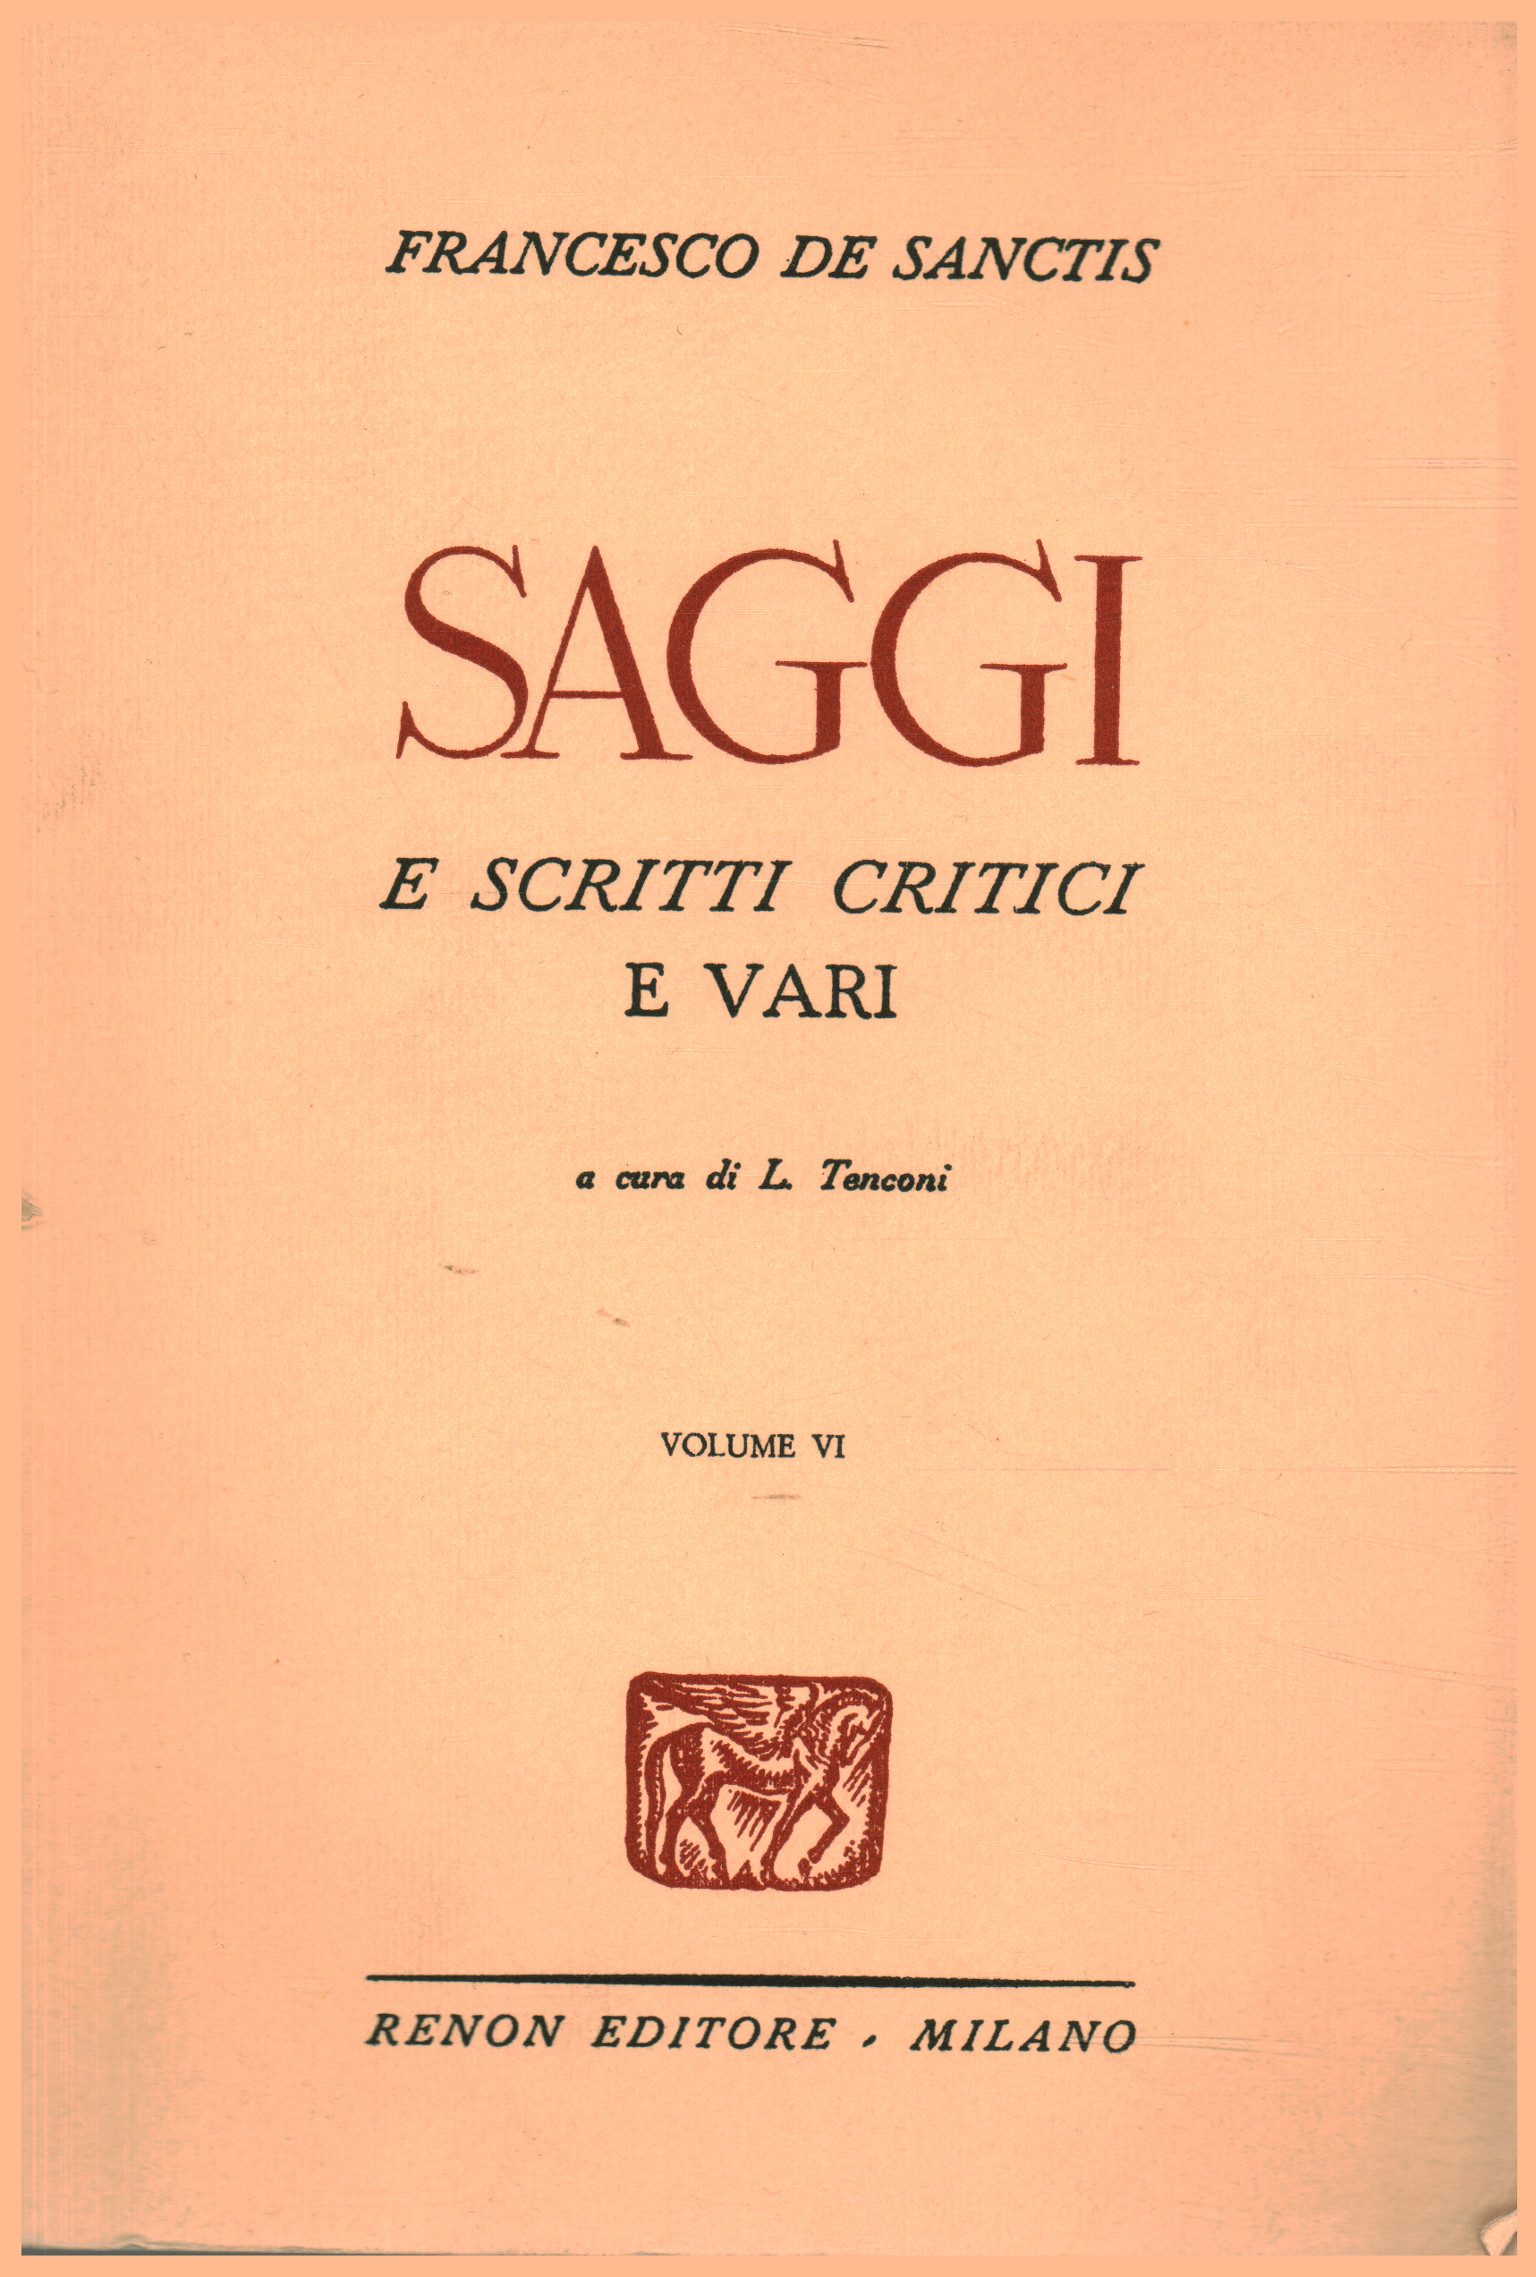 Critical and various essays and writings. Volume six, Francesco De Sanctis